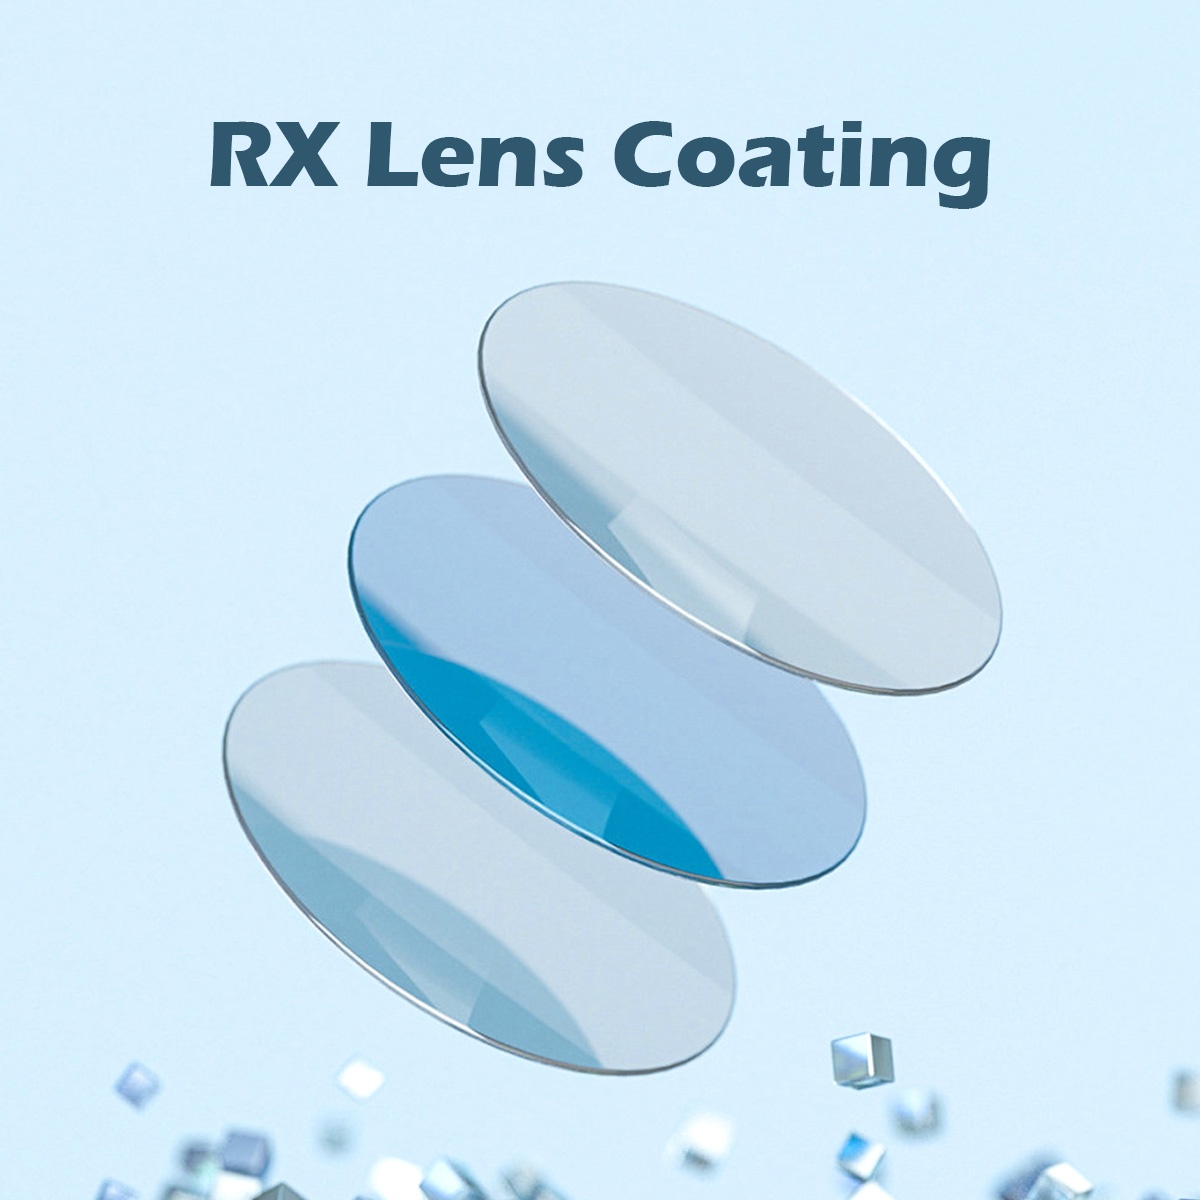 RX Lens Coating